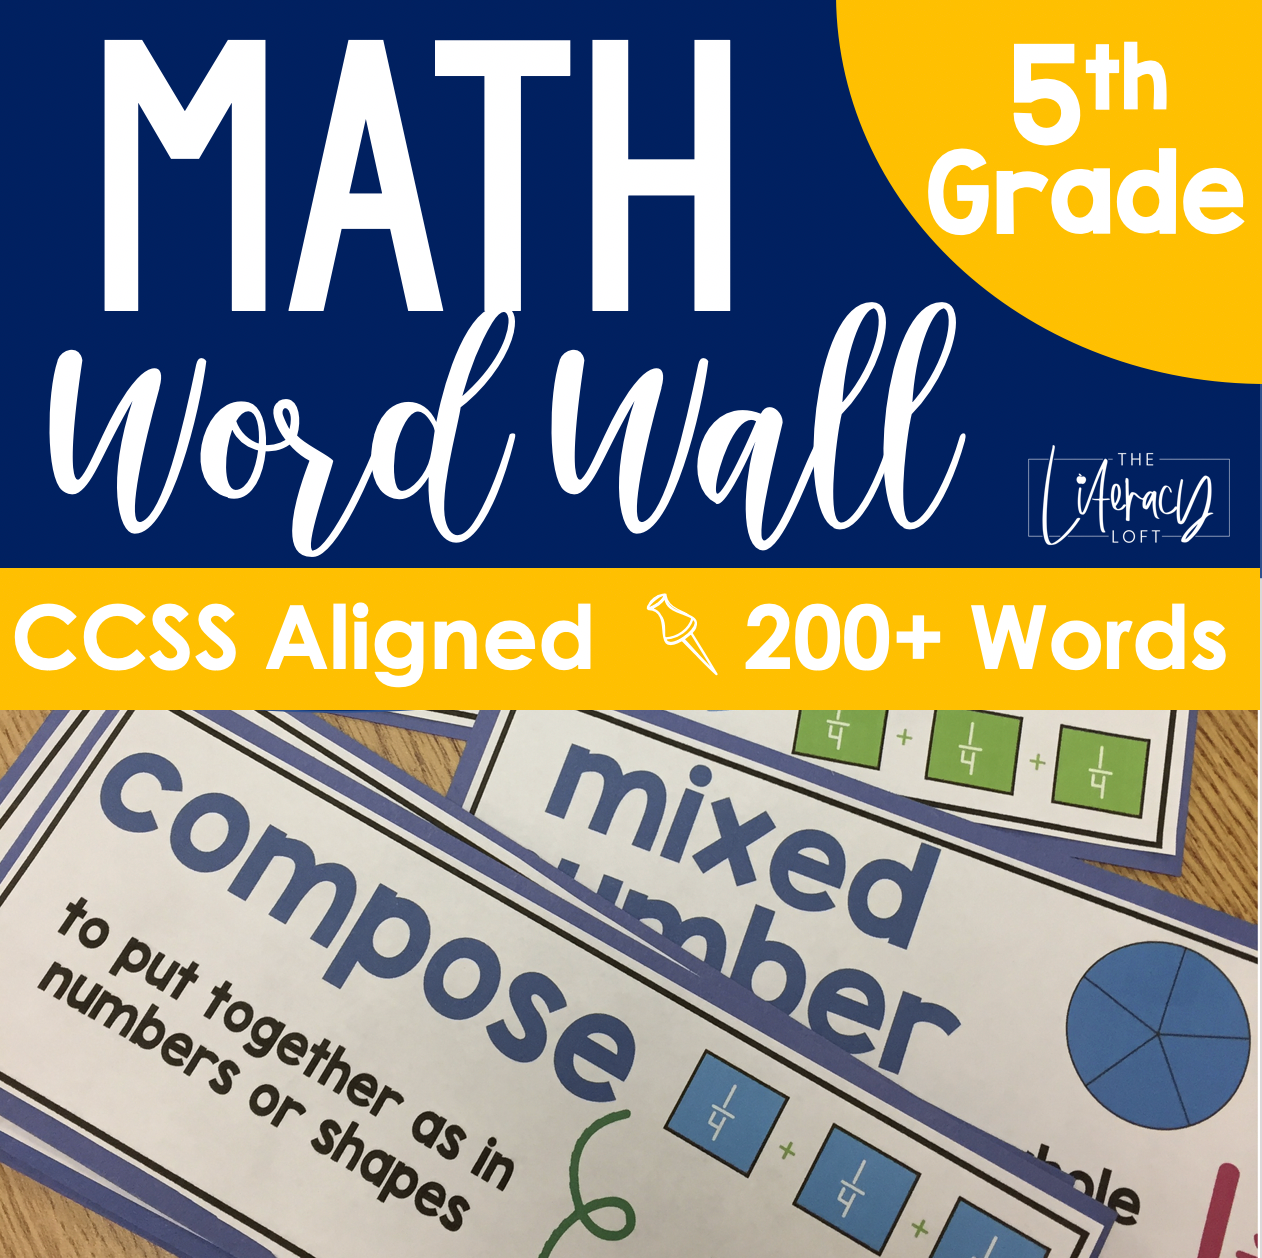 Math Word Wall 5th Grade - Vocabulary Cards